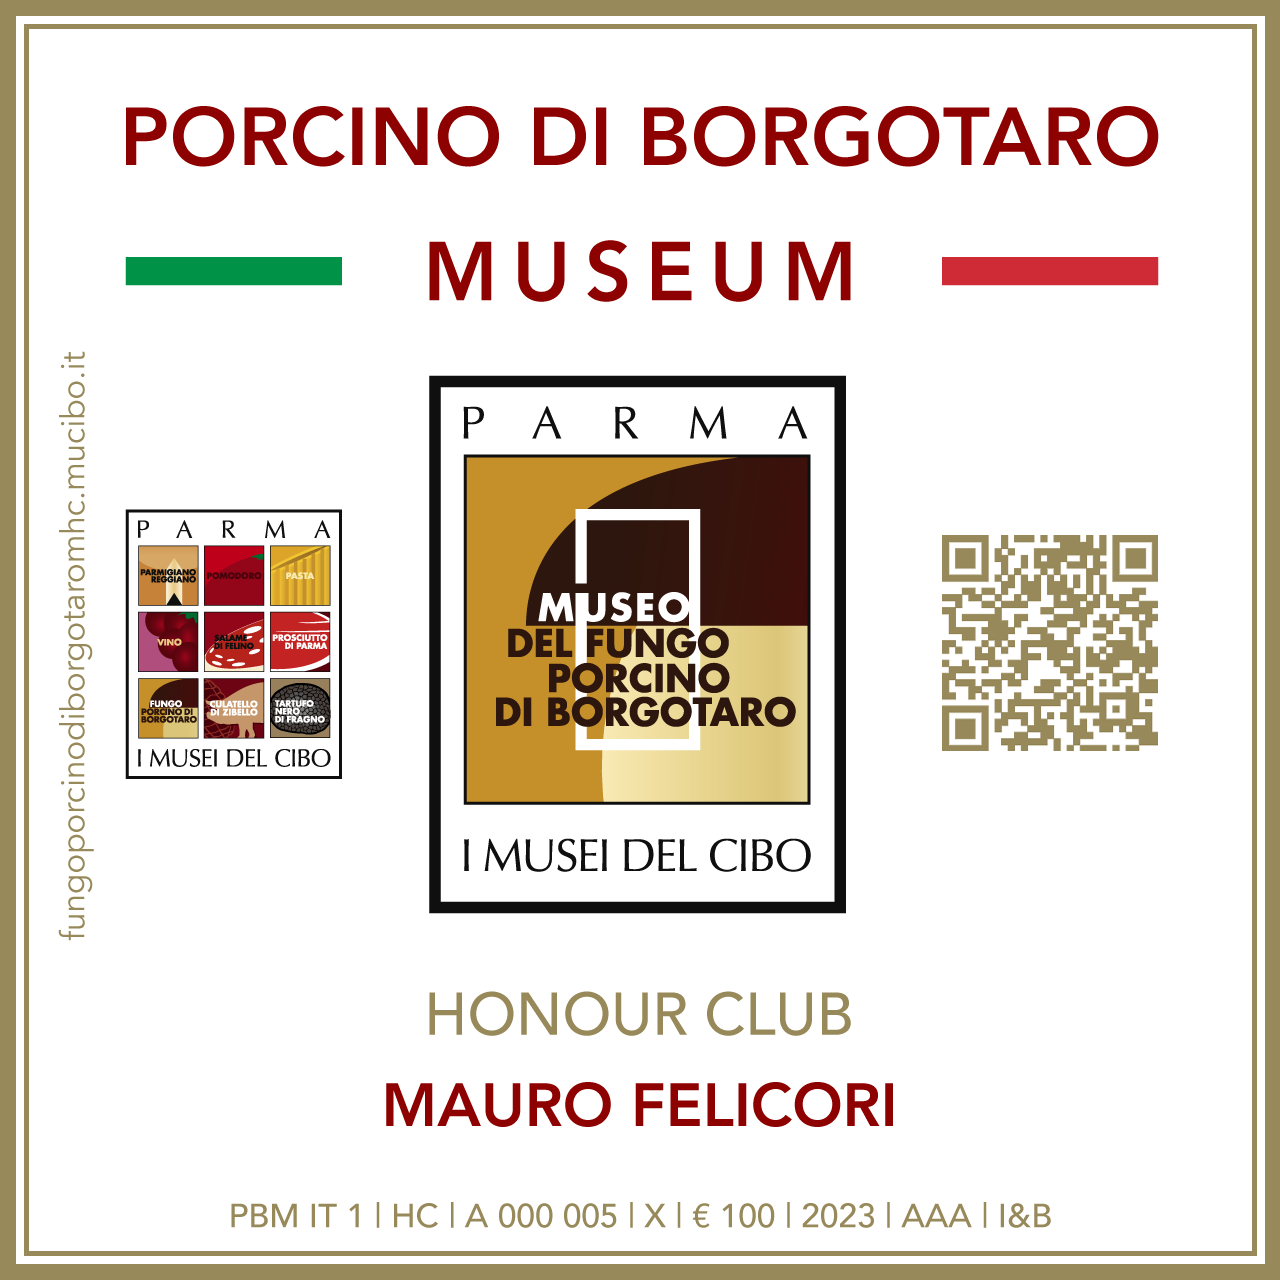 Fungo Porcino di Borgotaro Museum Honour Club - Token Id A 000 005 - MAURO FELICORI